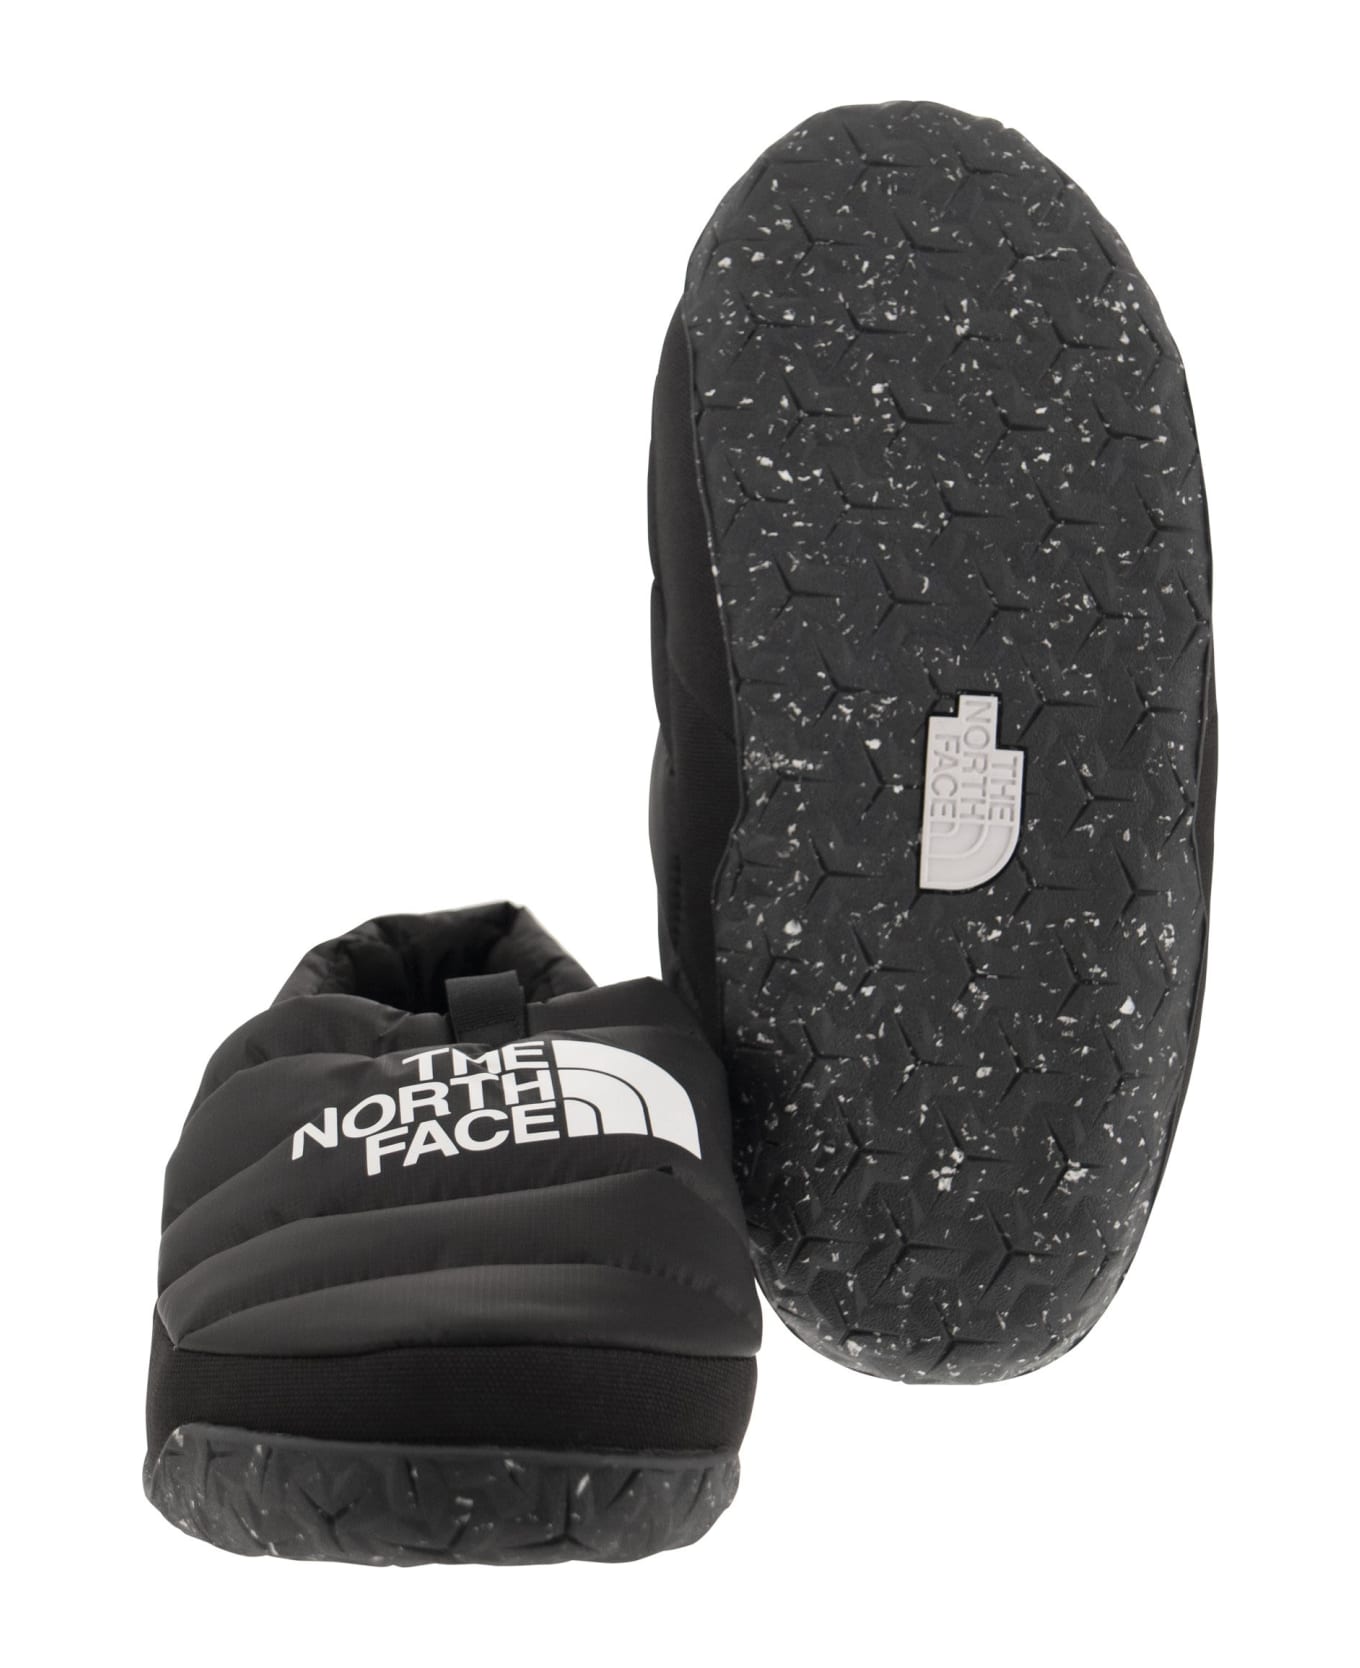 The North Face Nuptse - Winter Slippers - Black/white スニーカー